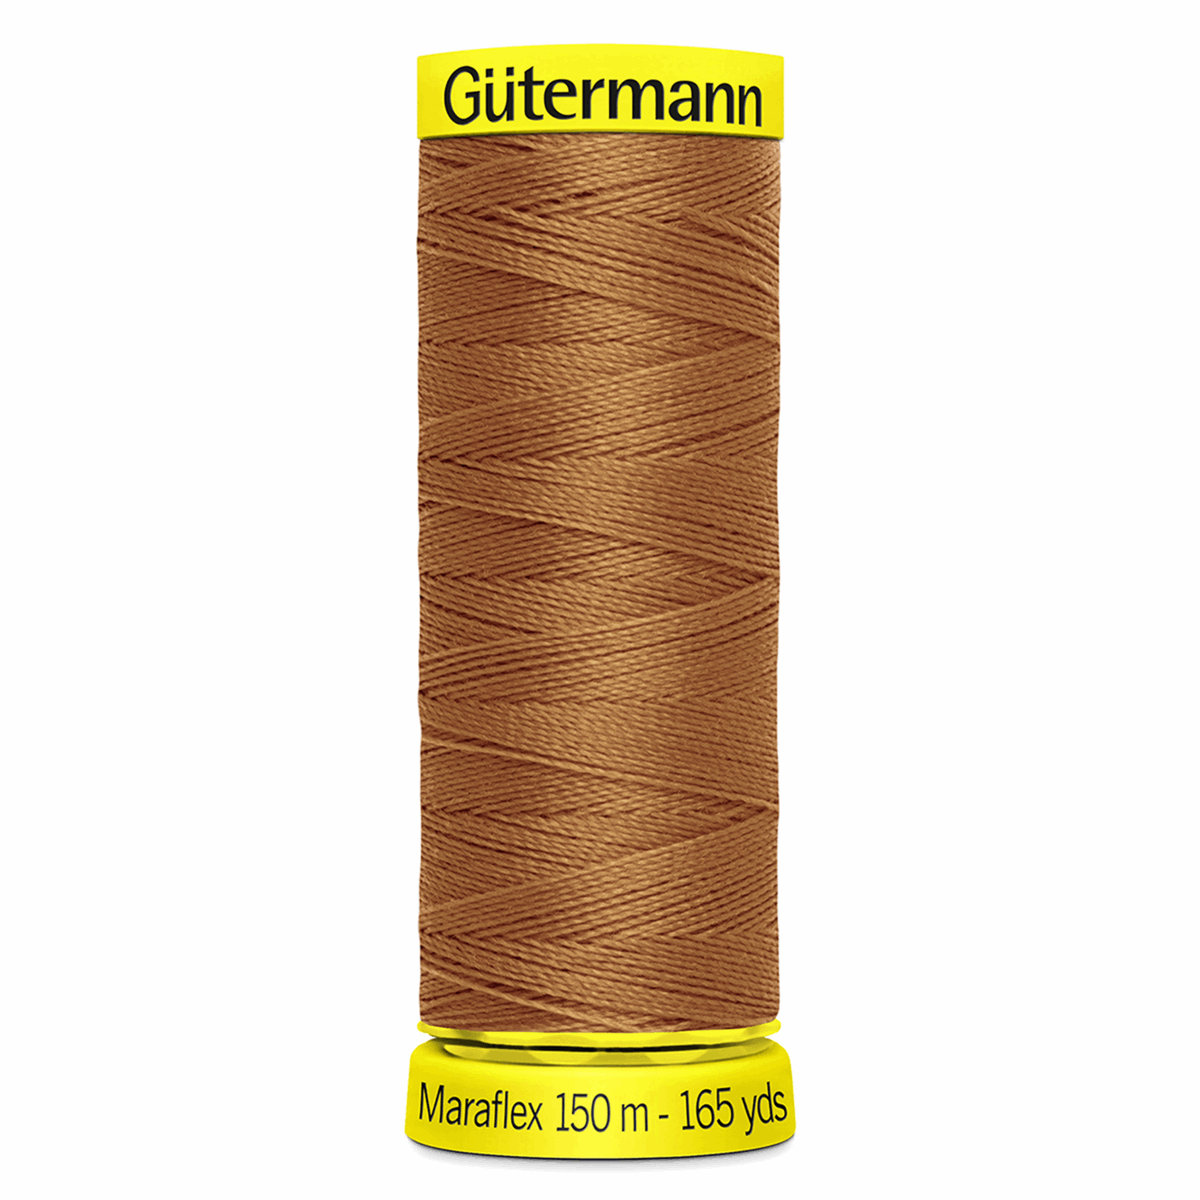 Gutermann Maraflex Elastic Sewing Thread 150m Burnt Orange 448